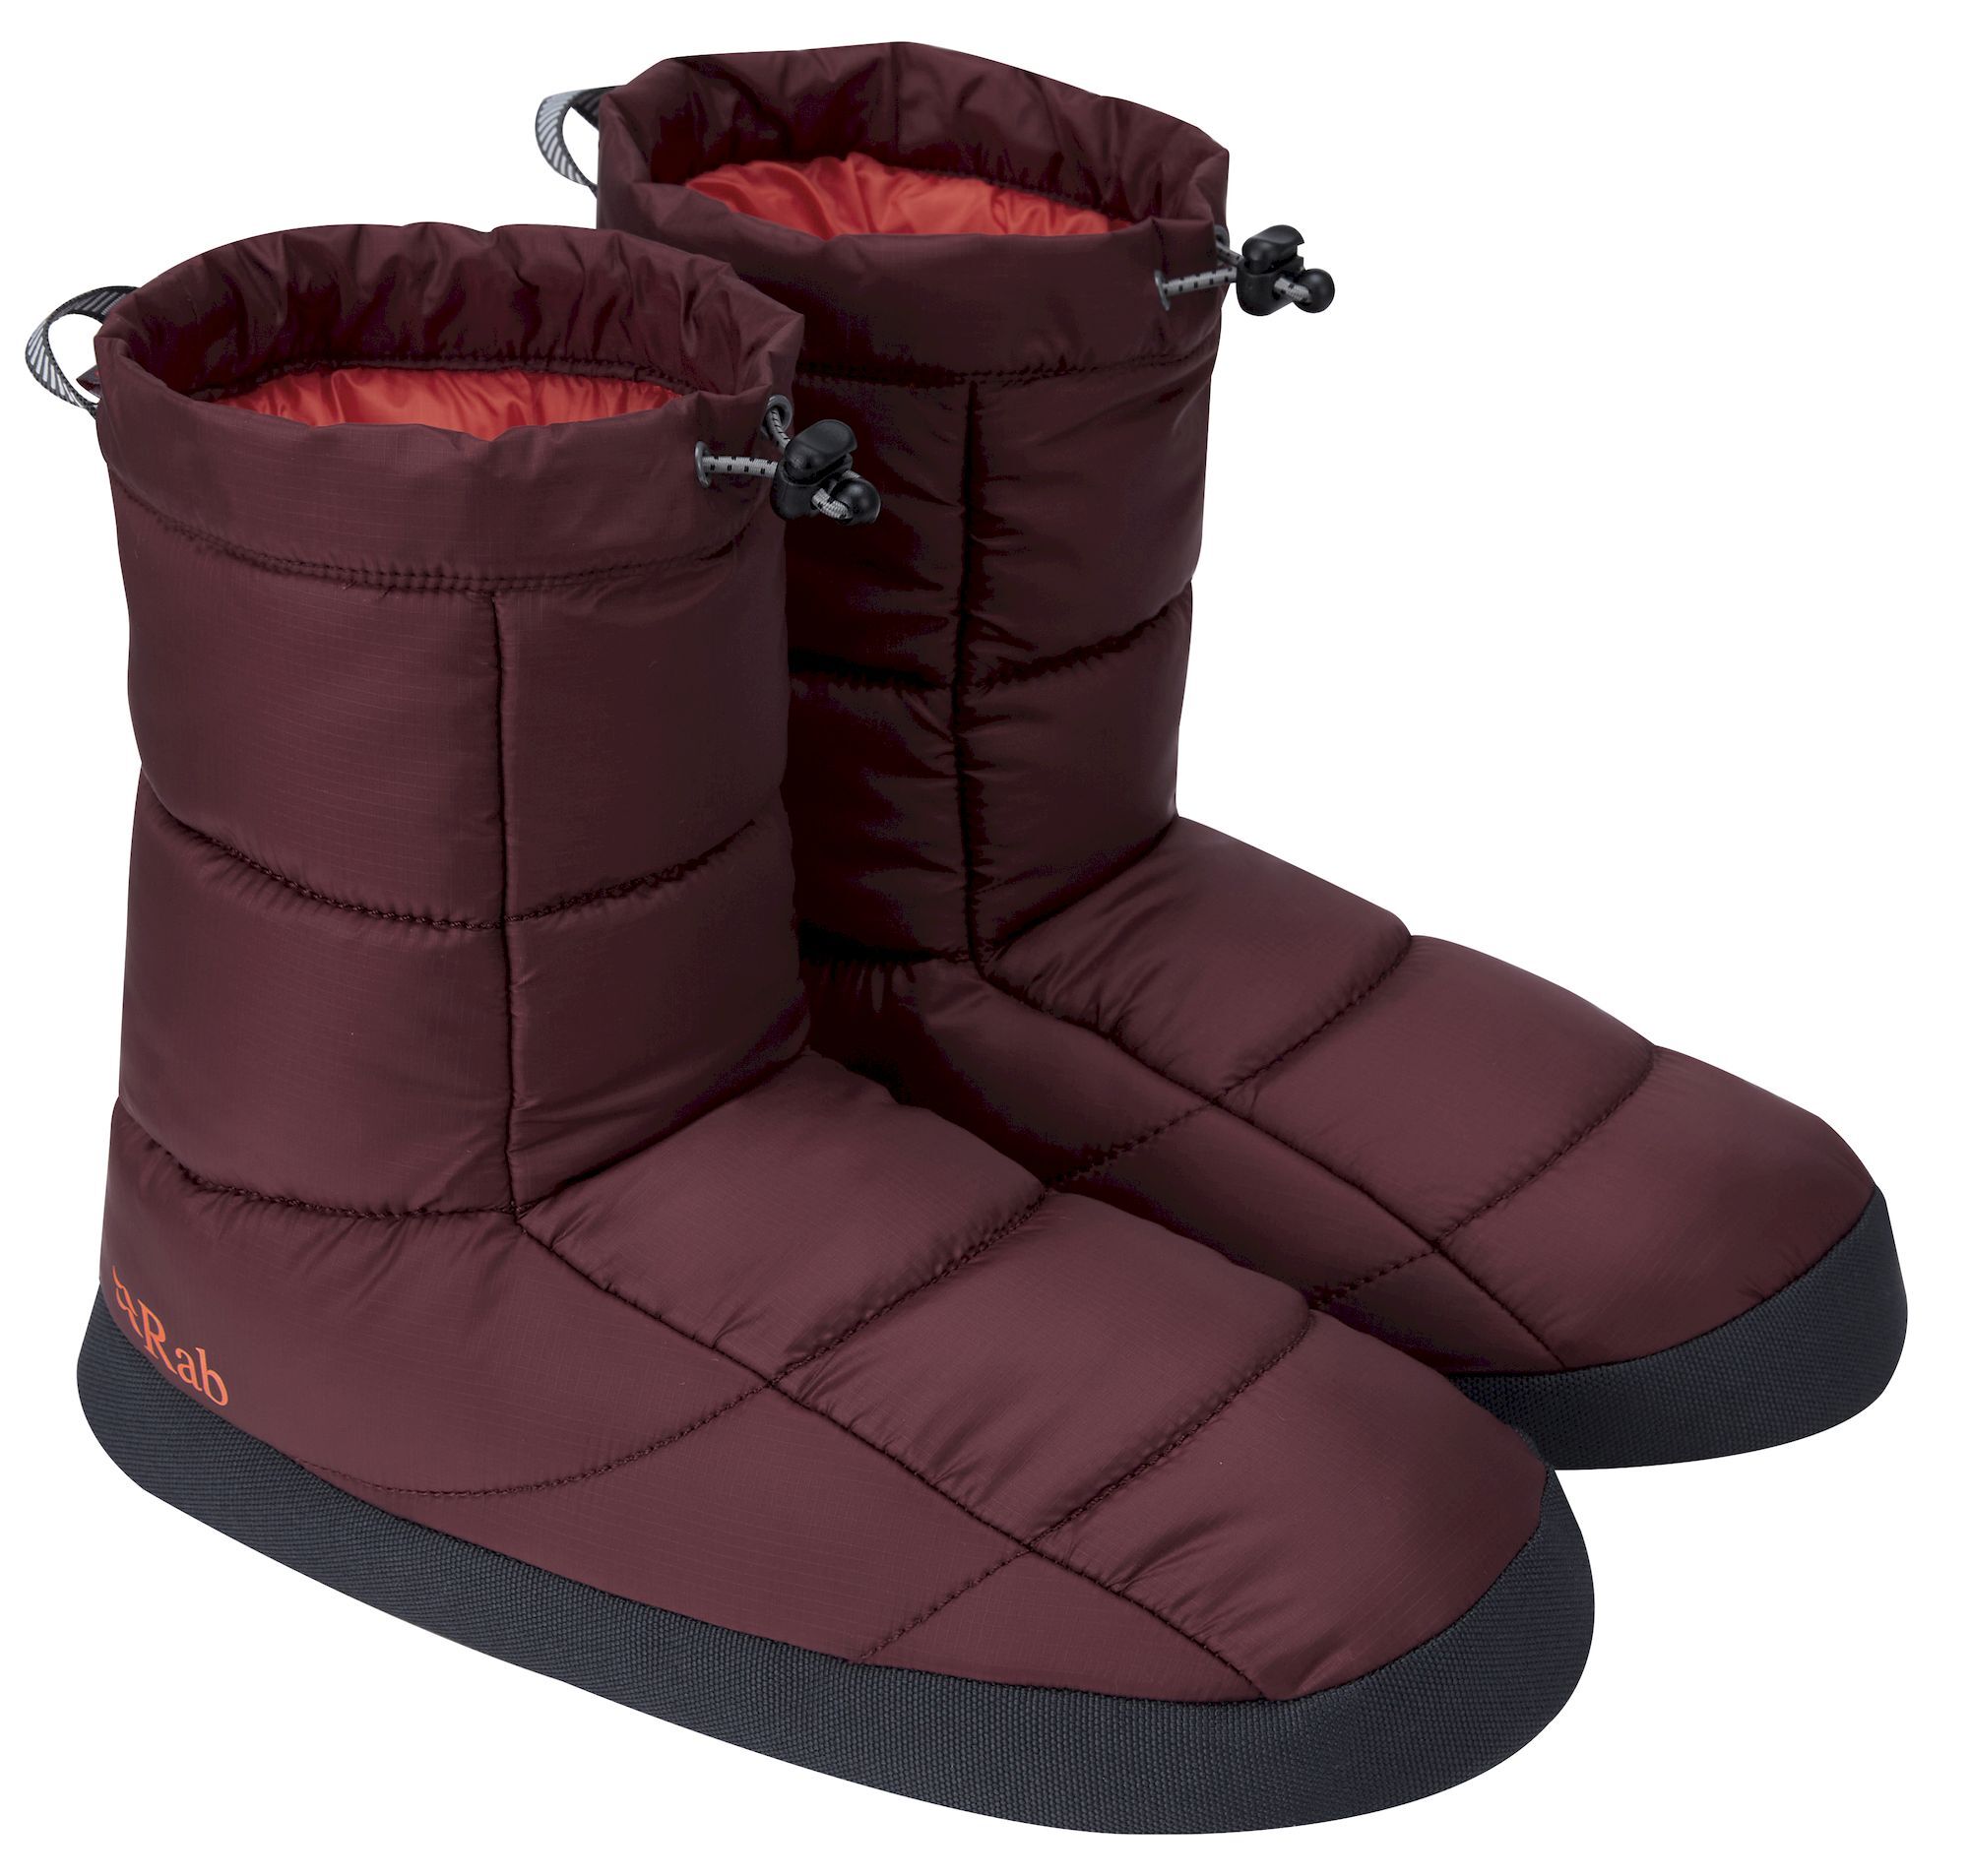 Rab Cirrus Hut Boot - Winter sandals - Men's | Hardloop